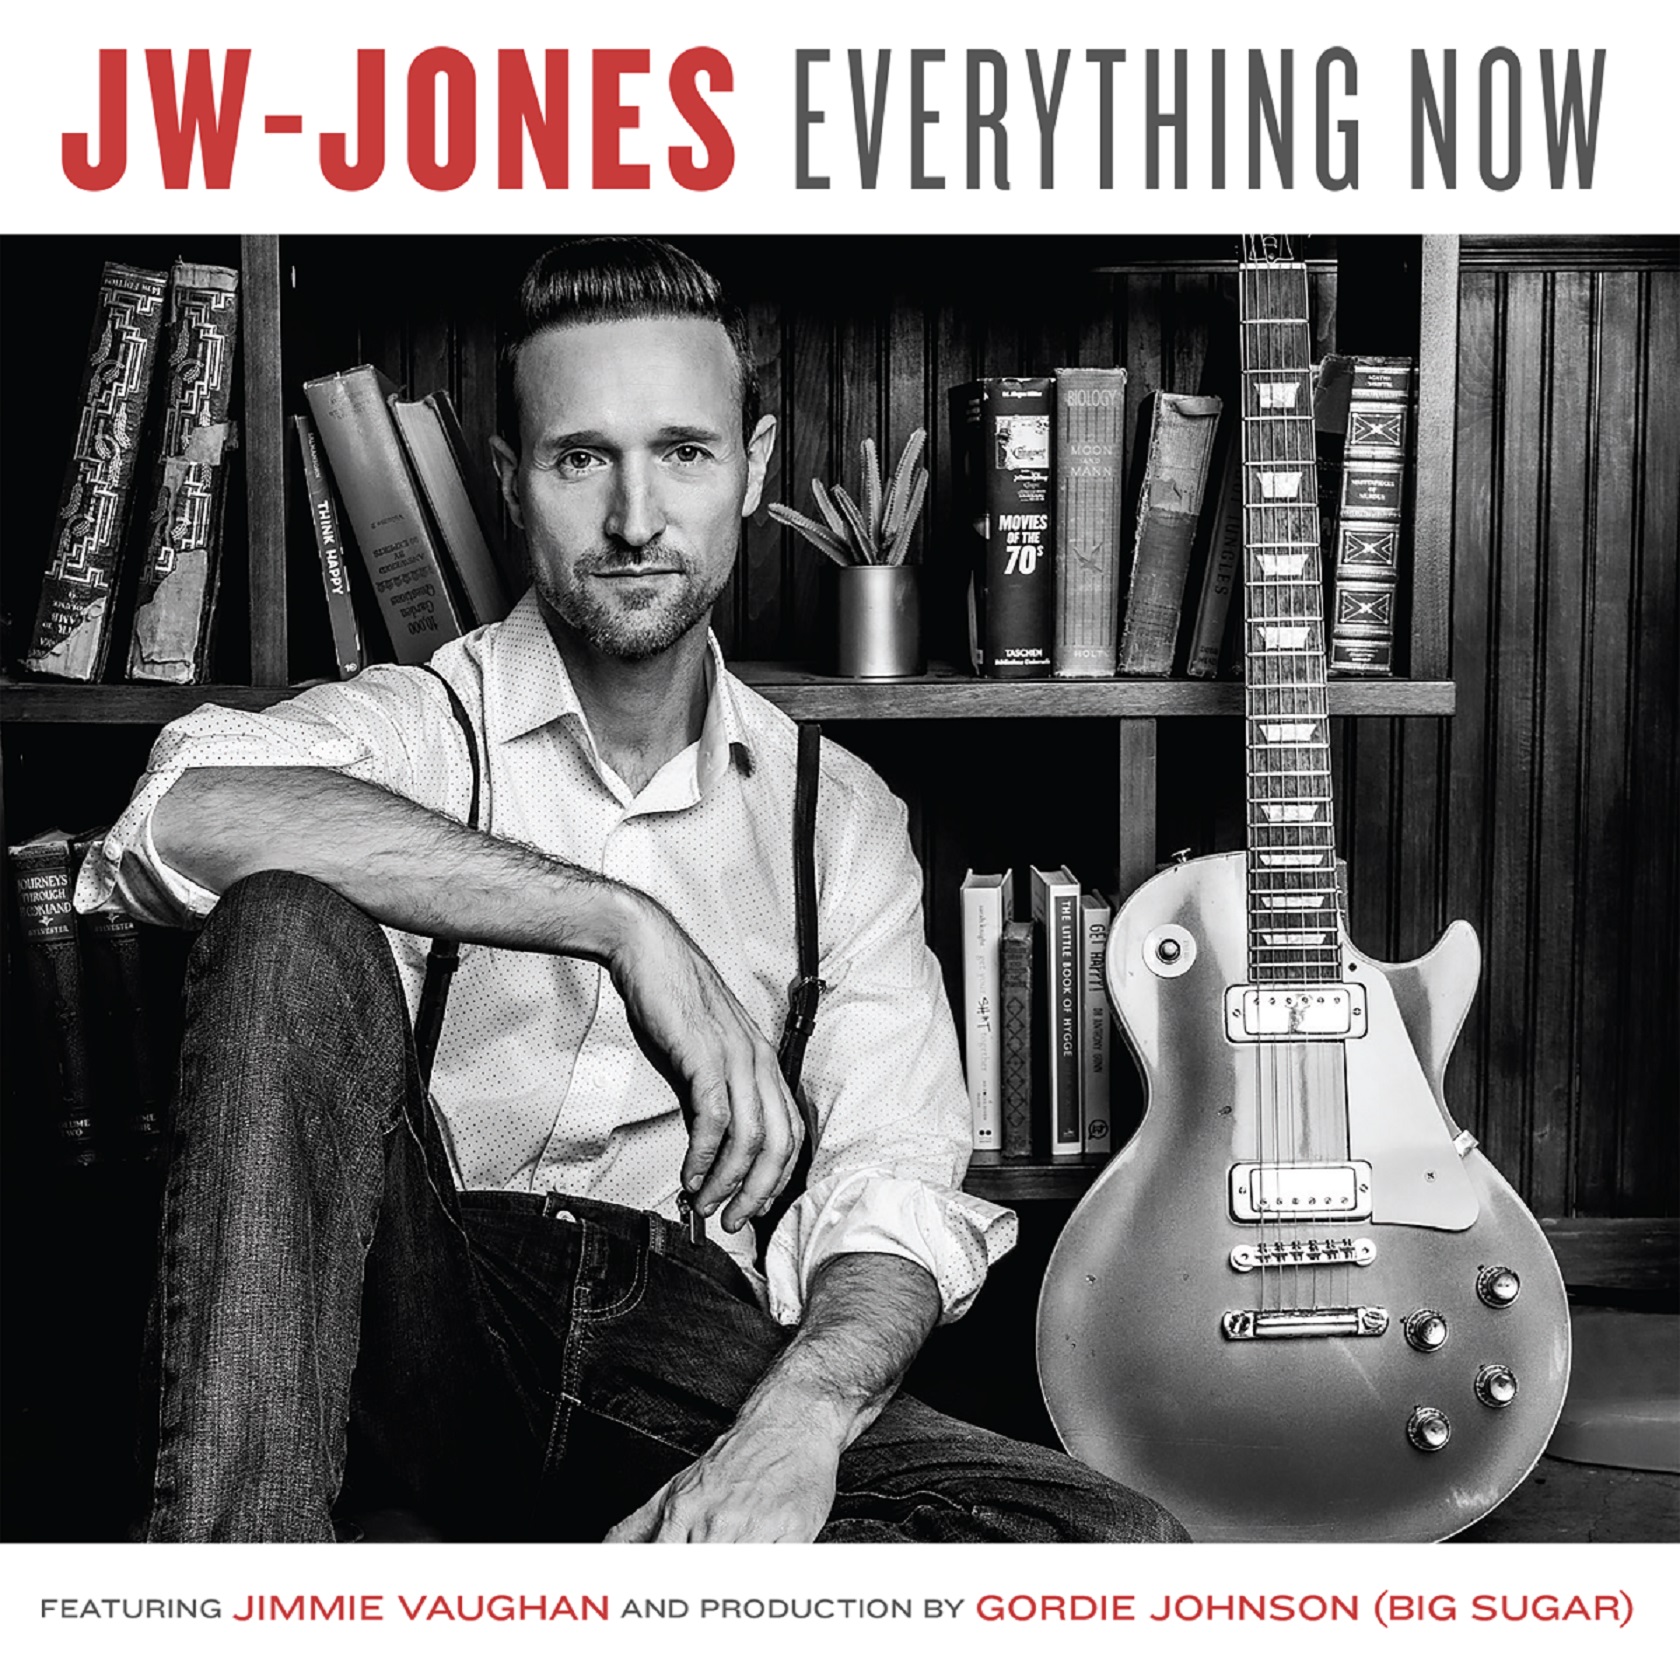 Singer/Guitarist JW-Jones Has "Everything Now" on His New Album